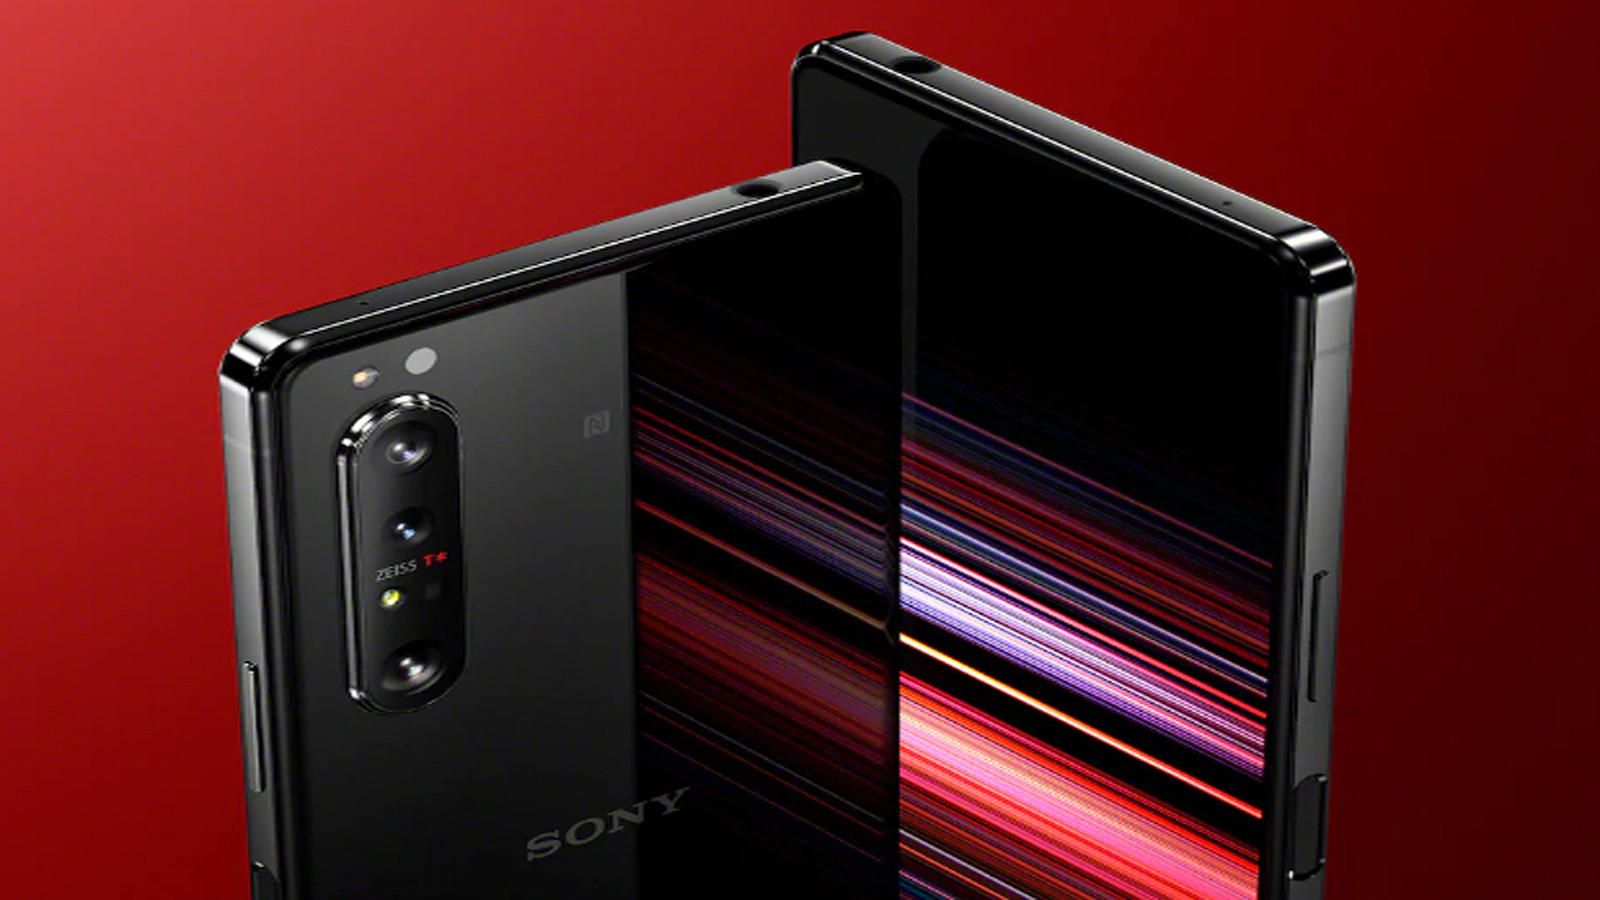 “Sony Xperia 1 II: Snapdragon 865, Triple Cameras Revealed!”